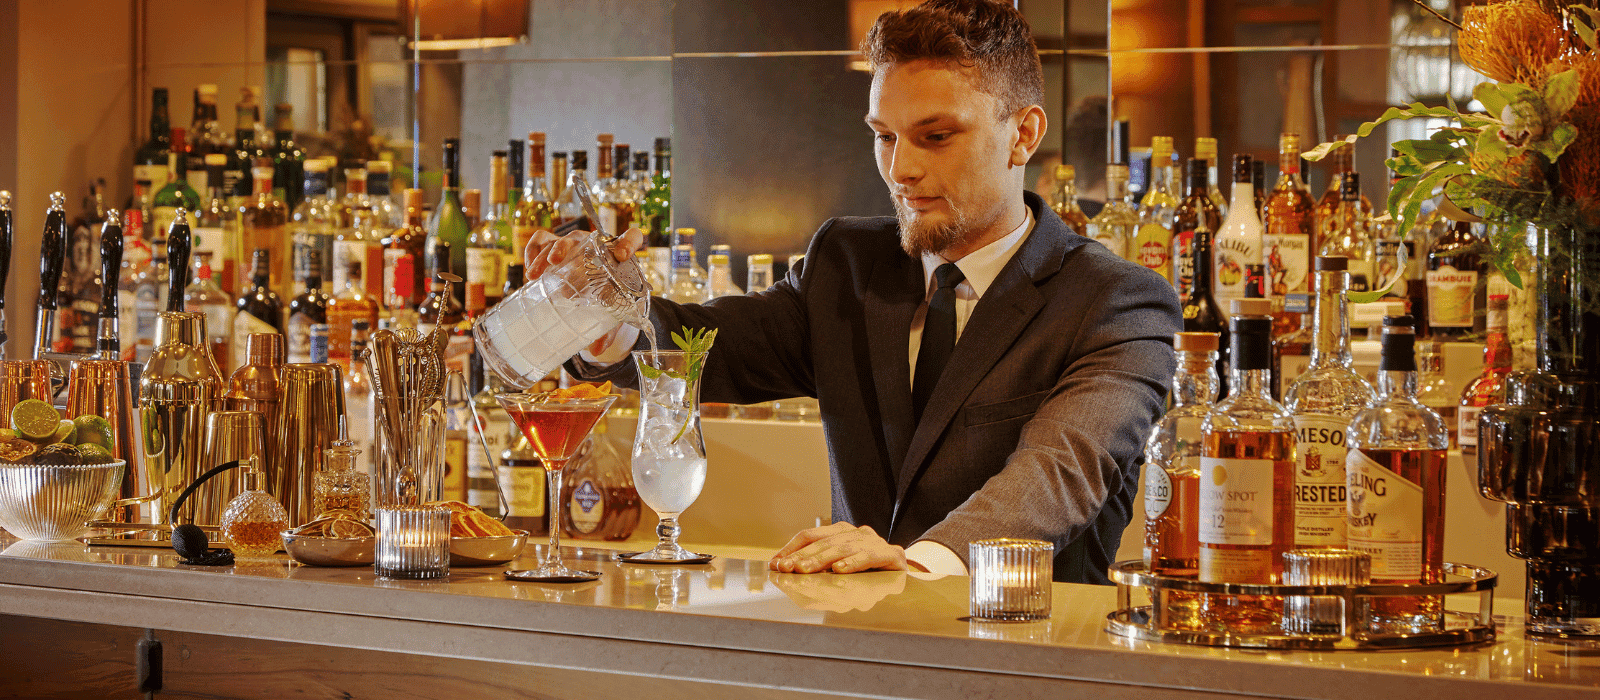 The Lounge Barman